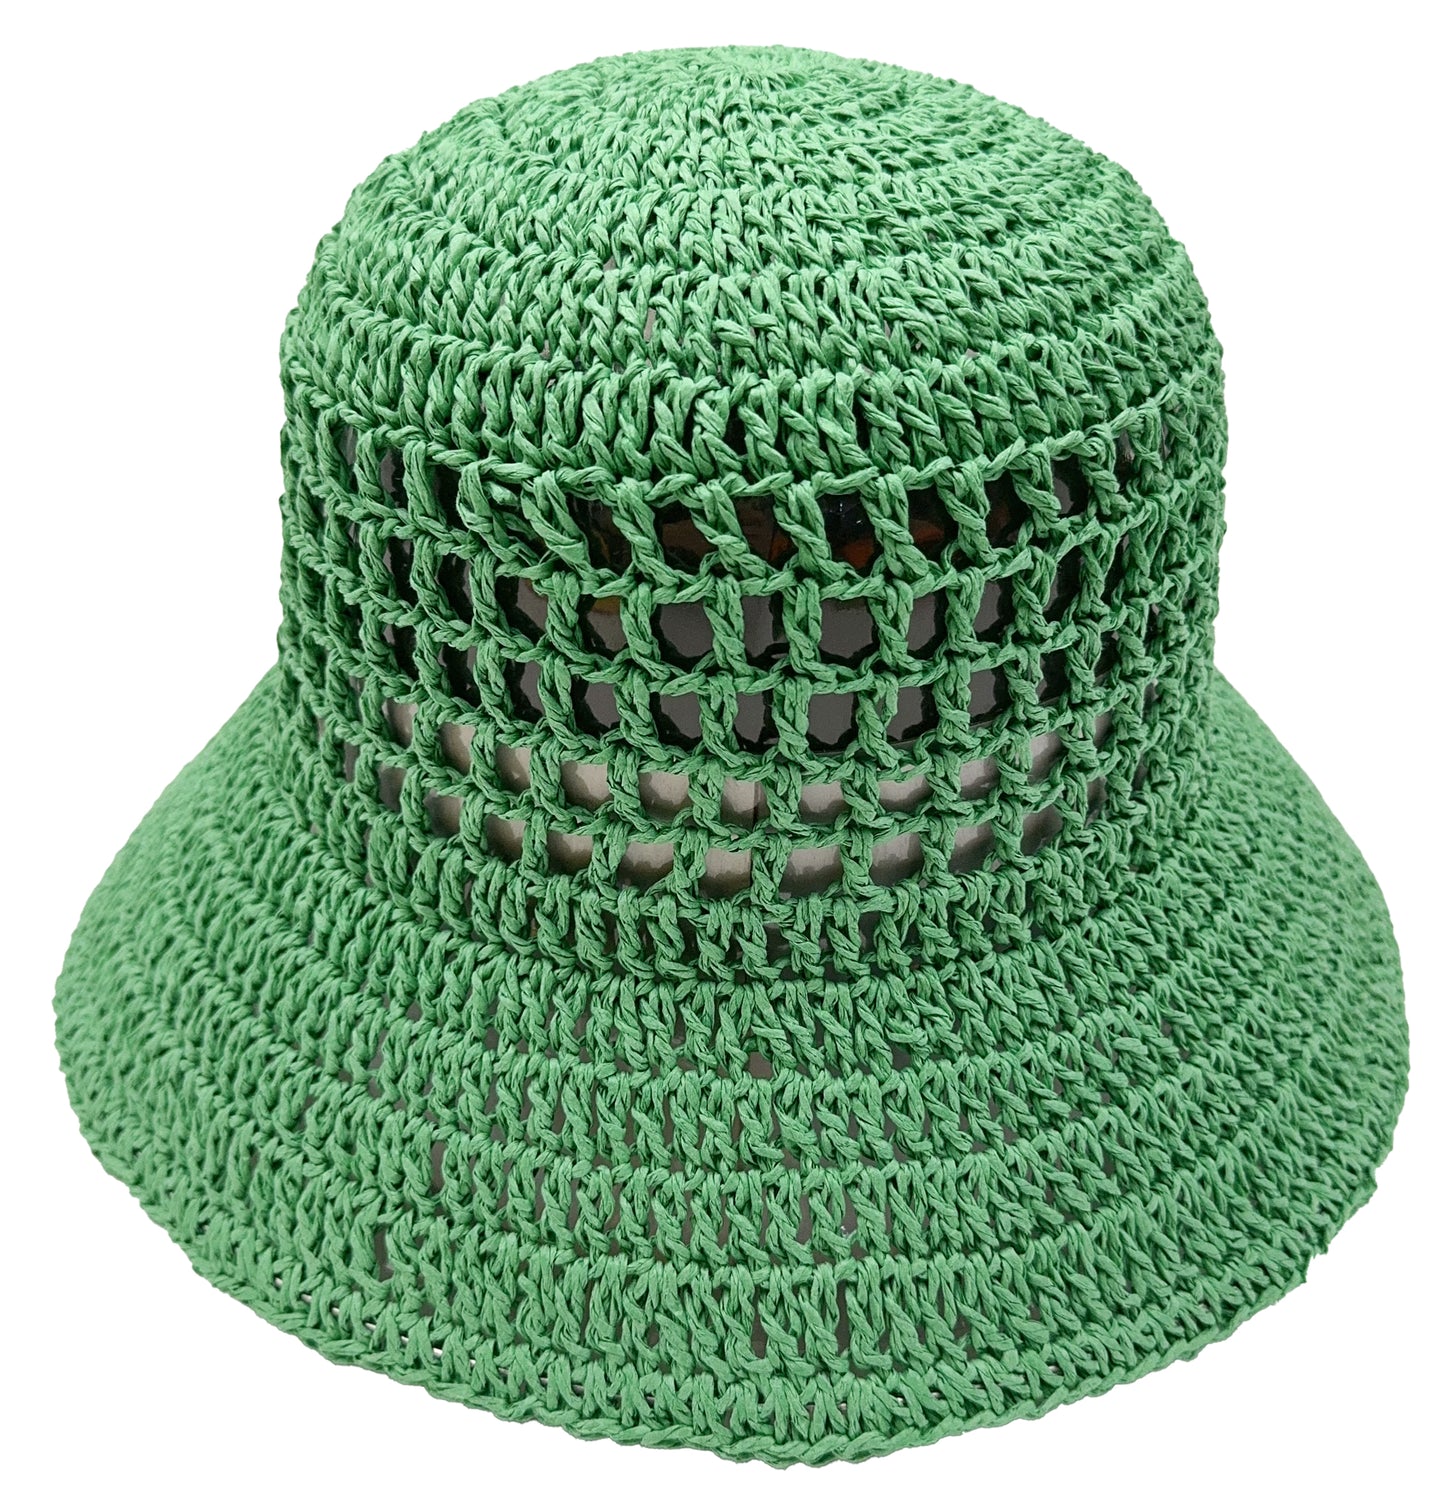 Solid Straw Bucket Hat